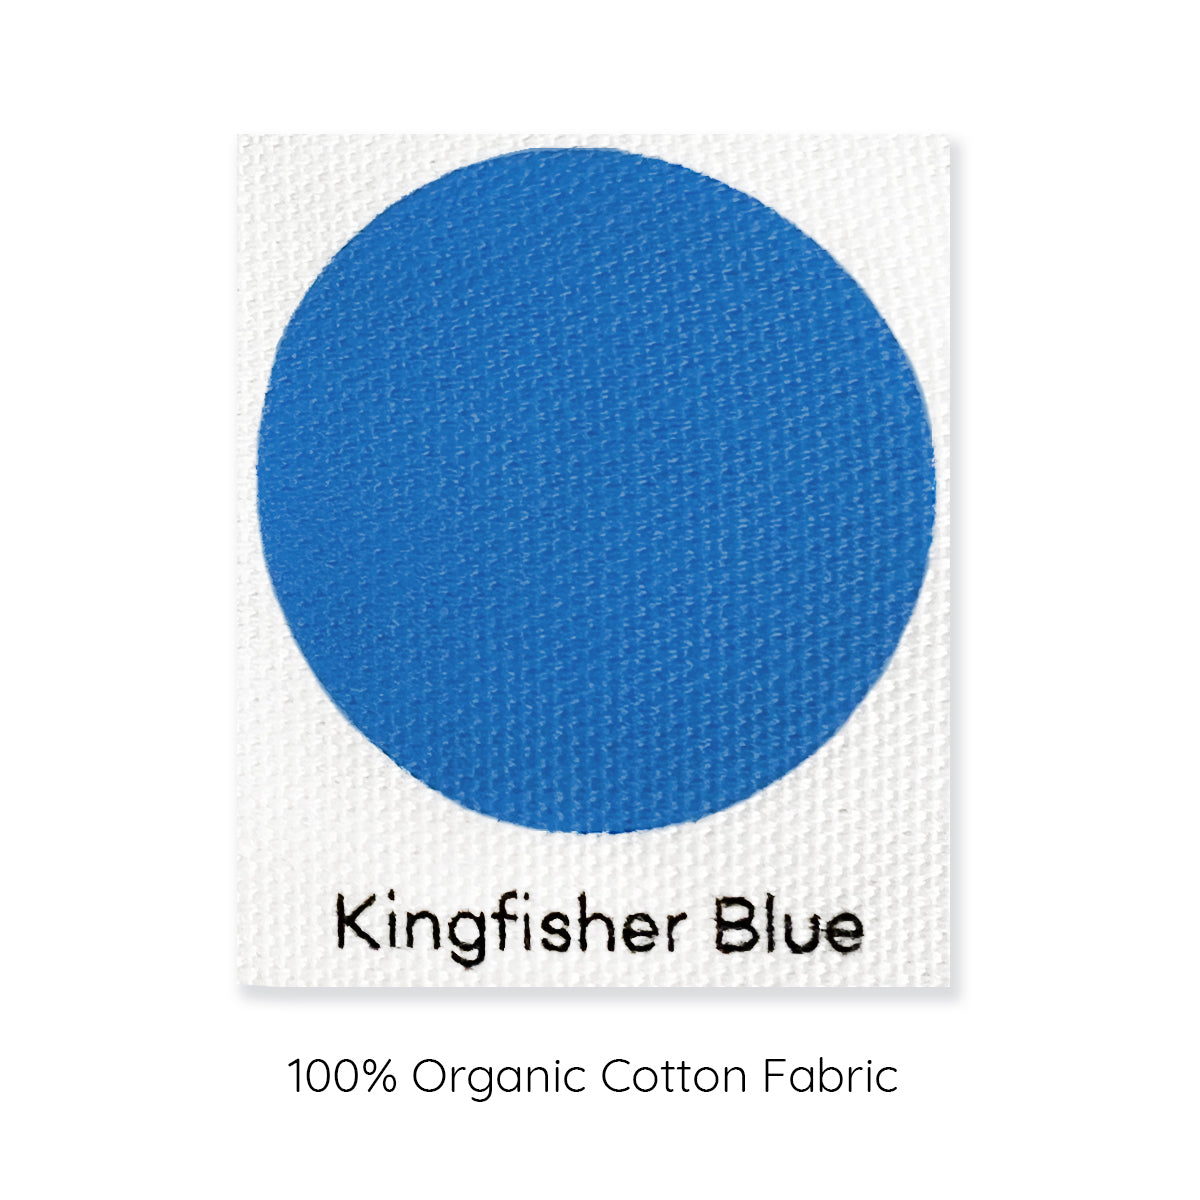 kingfisher blue 100% organic cotton cushion cover sample.